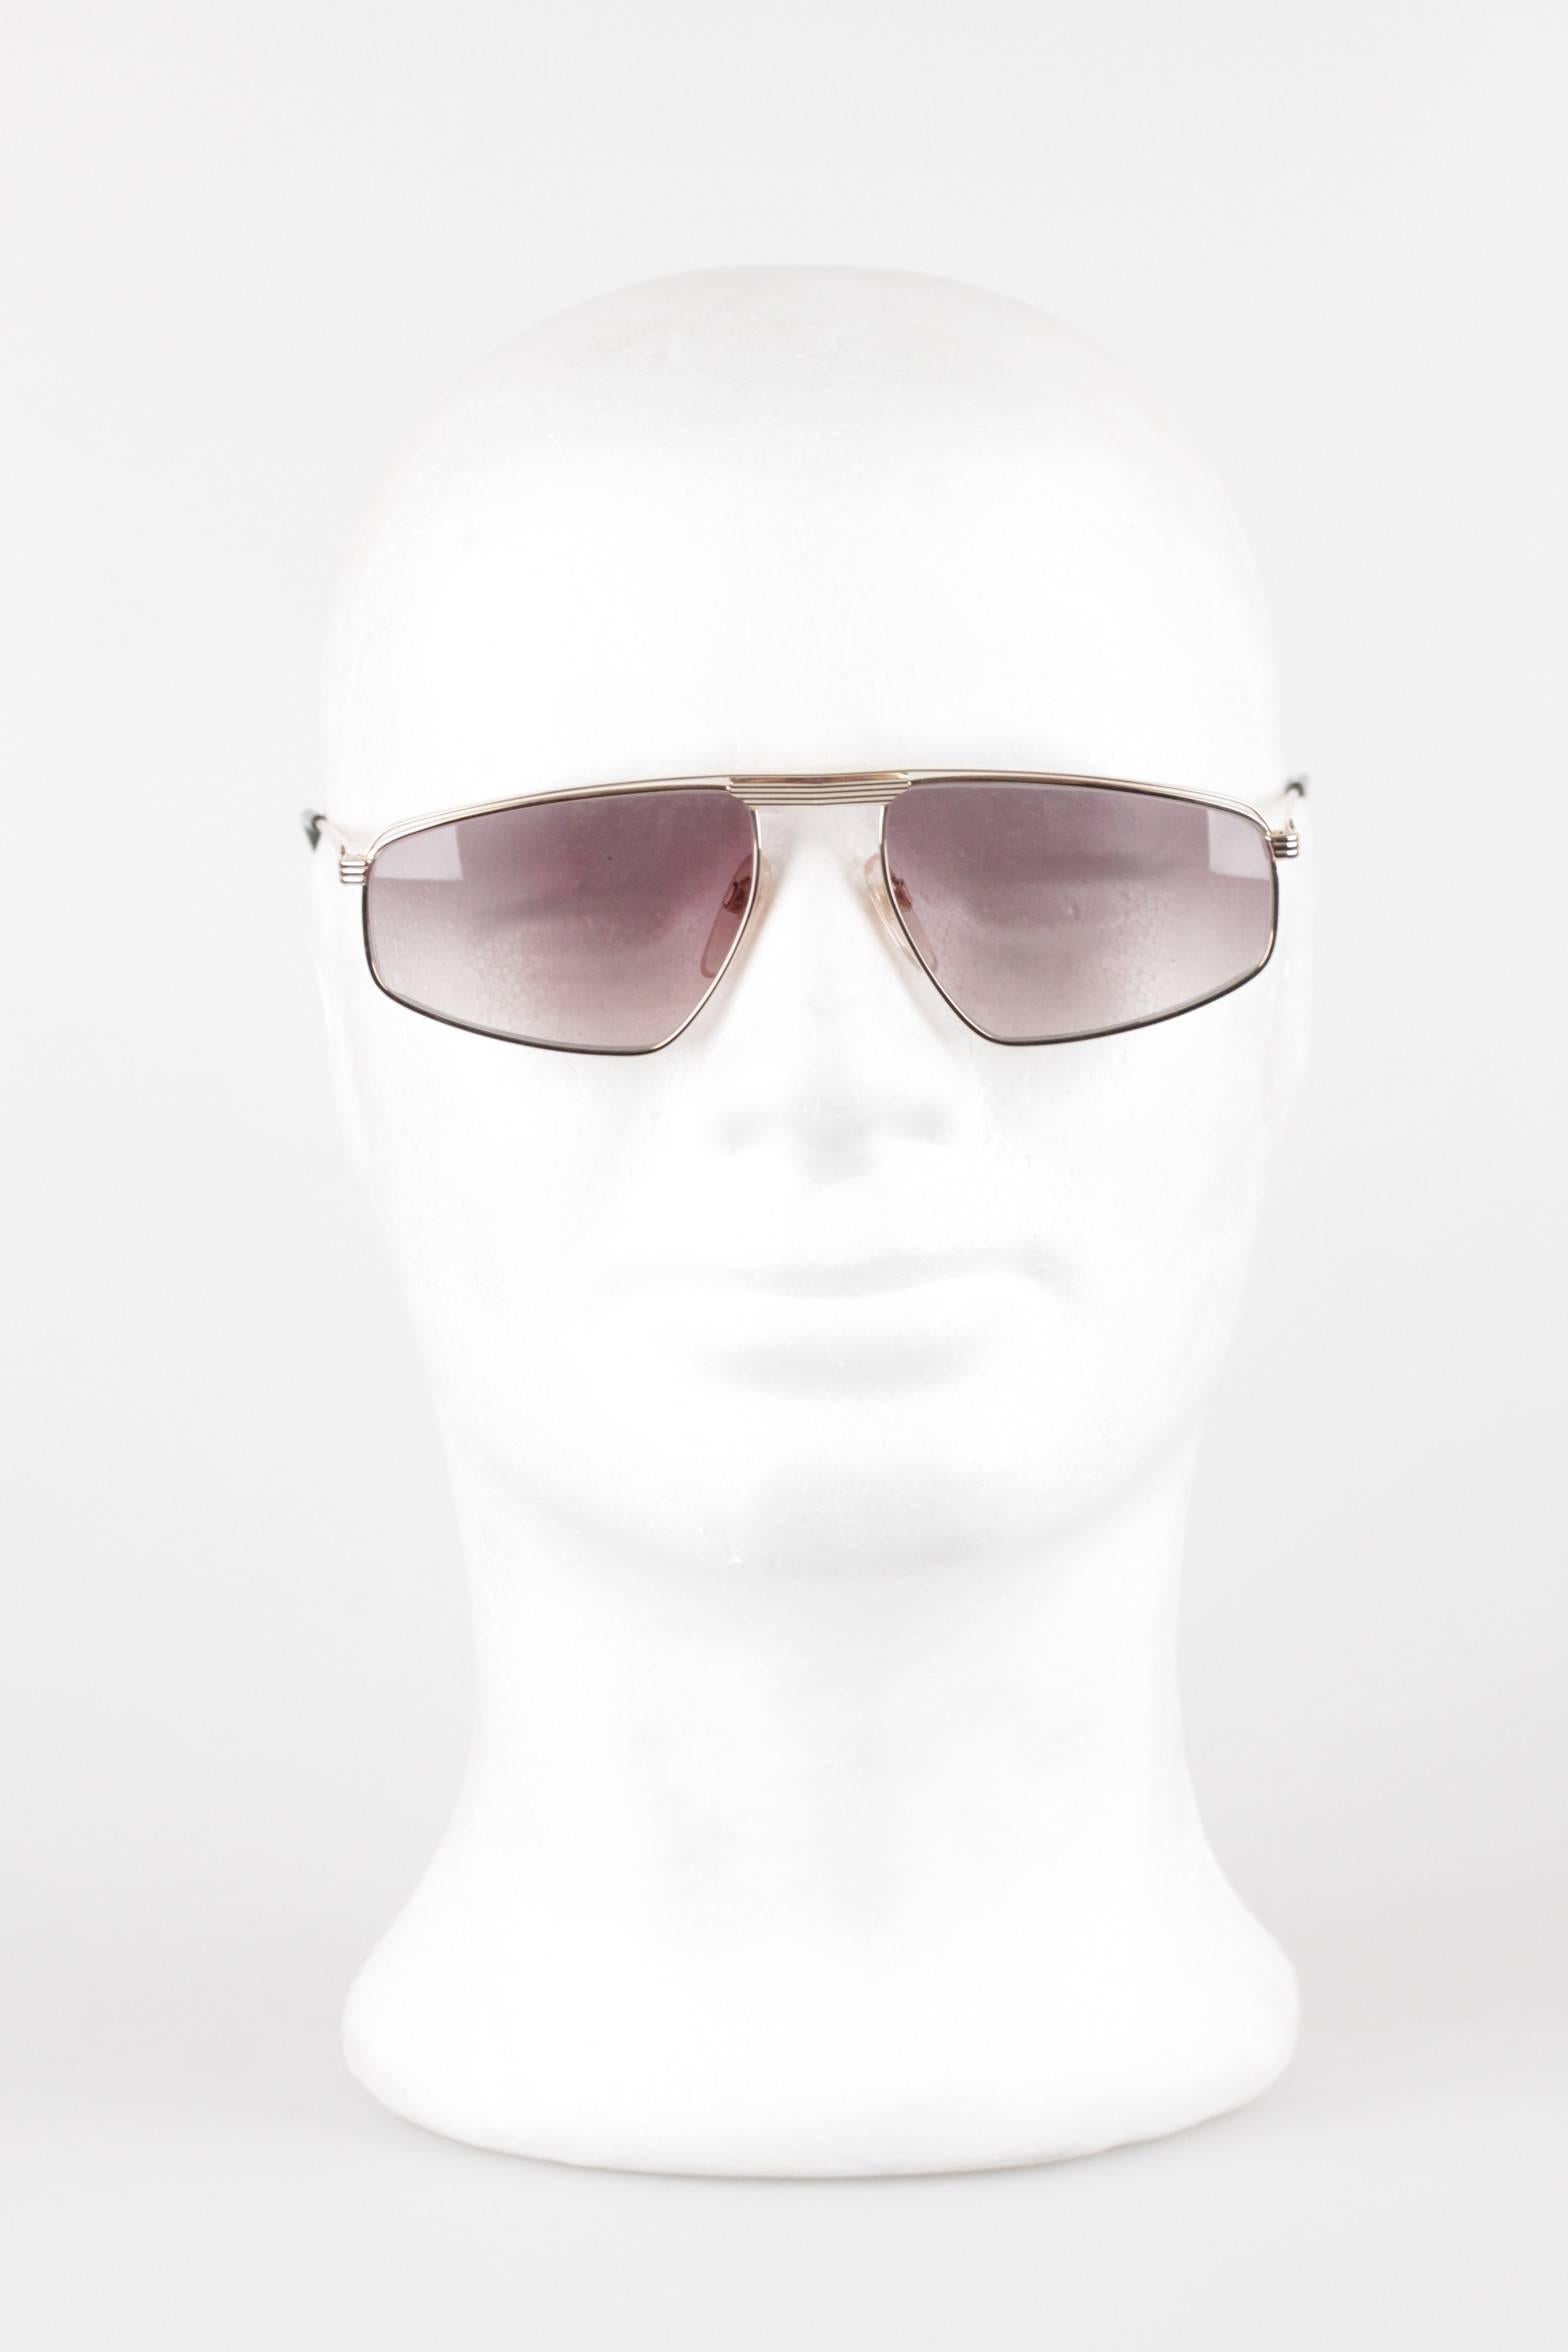 YVES SAINT LAURENT Vintage MINT UNSIEX Sunglasses mod. ASTERIUS 60/18 4